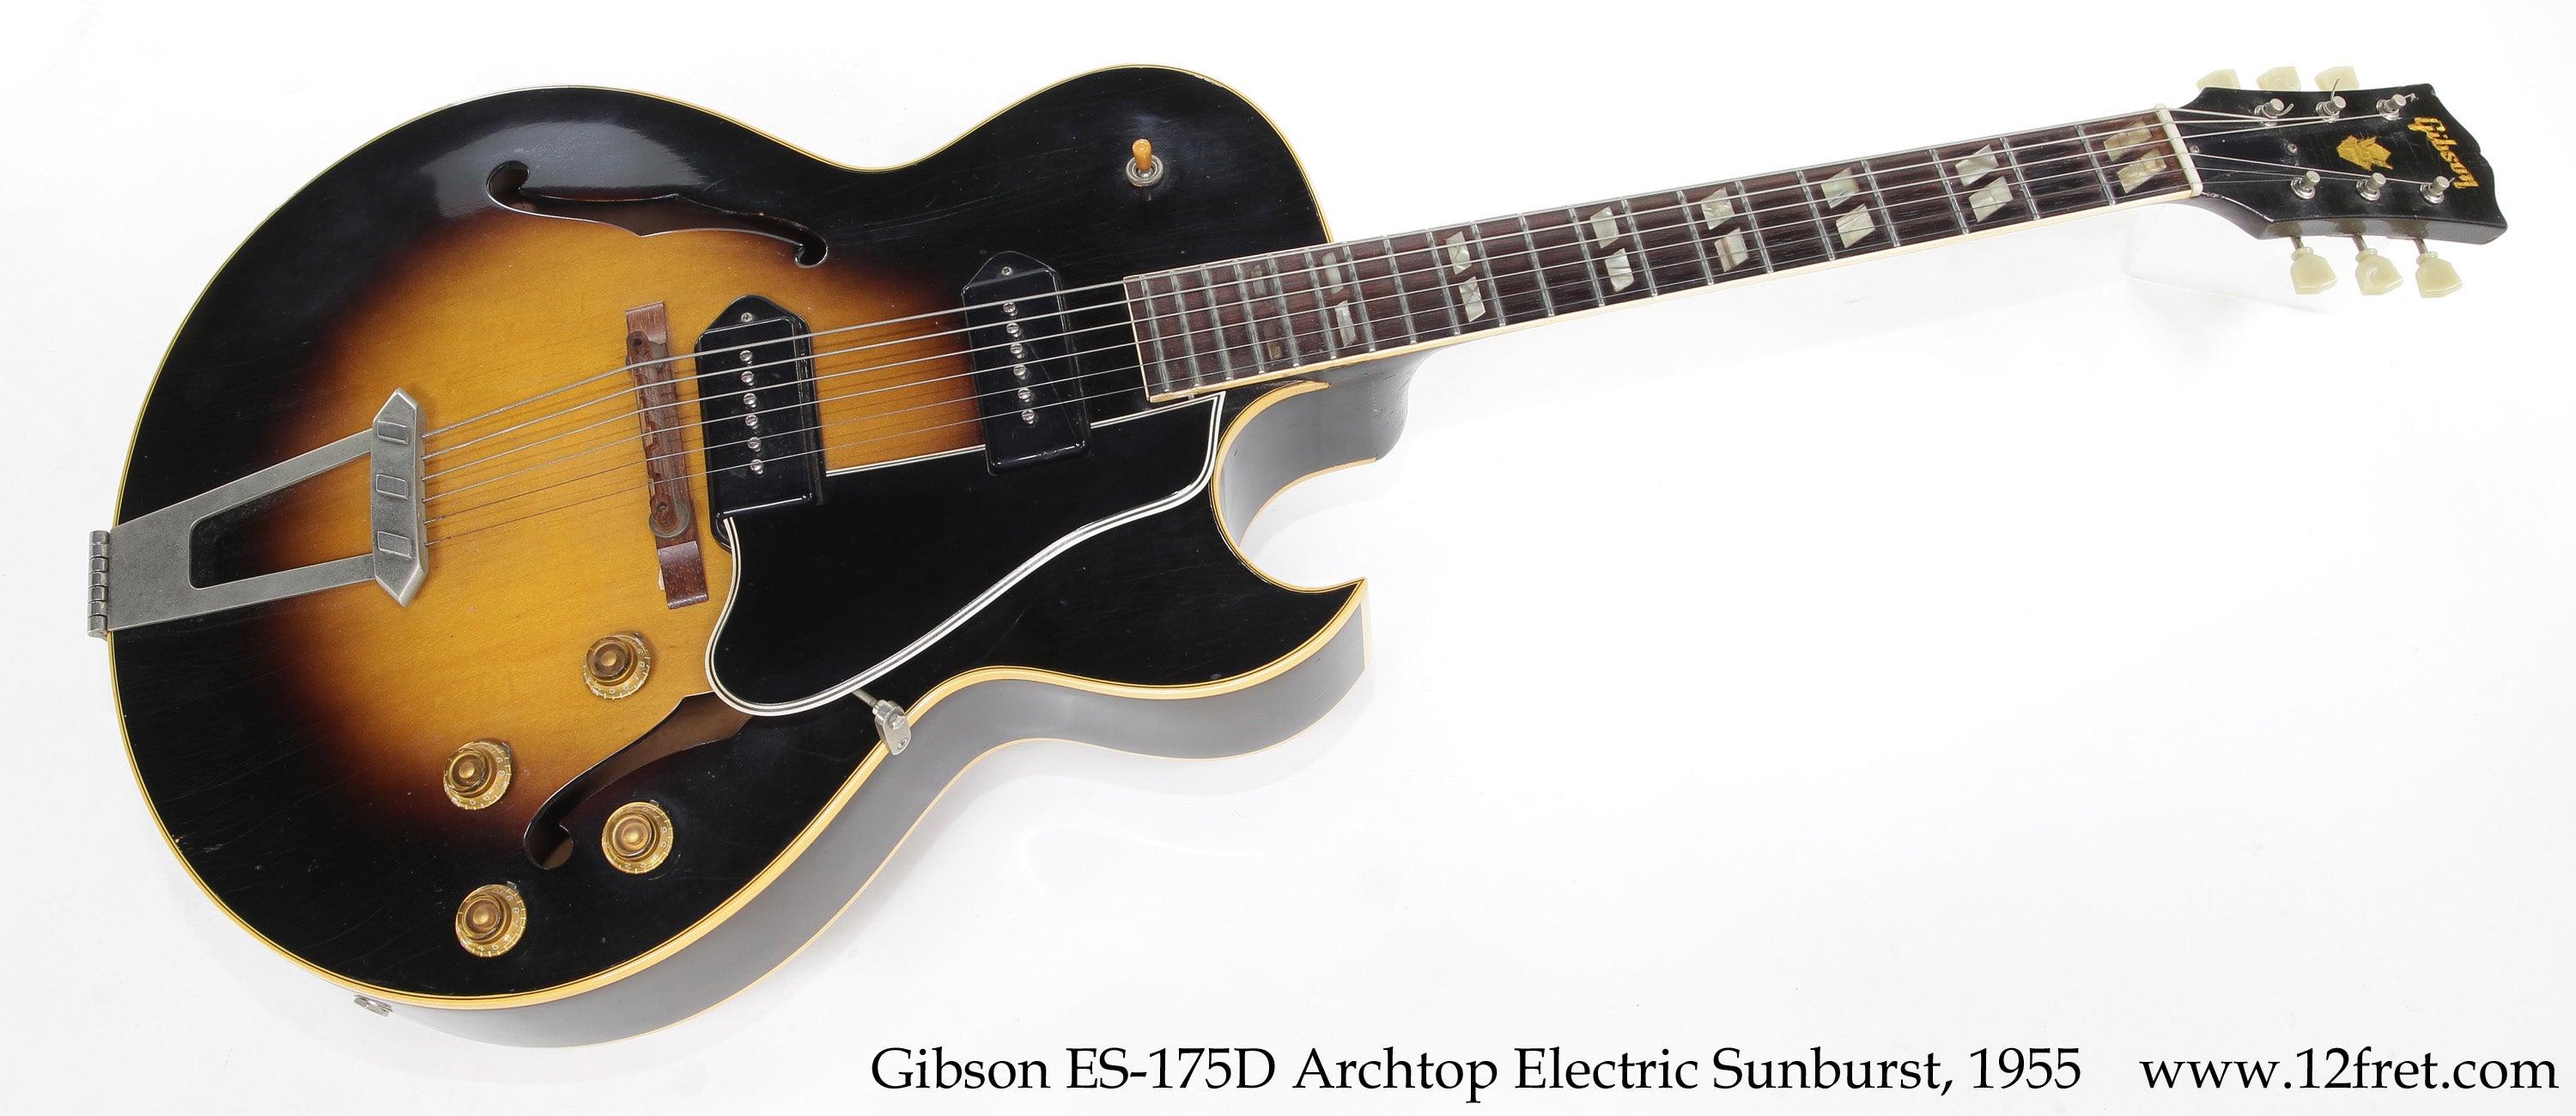 Gibson ES-175D Archtop Electric Sunburst, 1955 - The Twelfth Fret